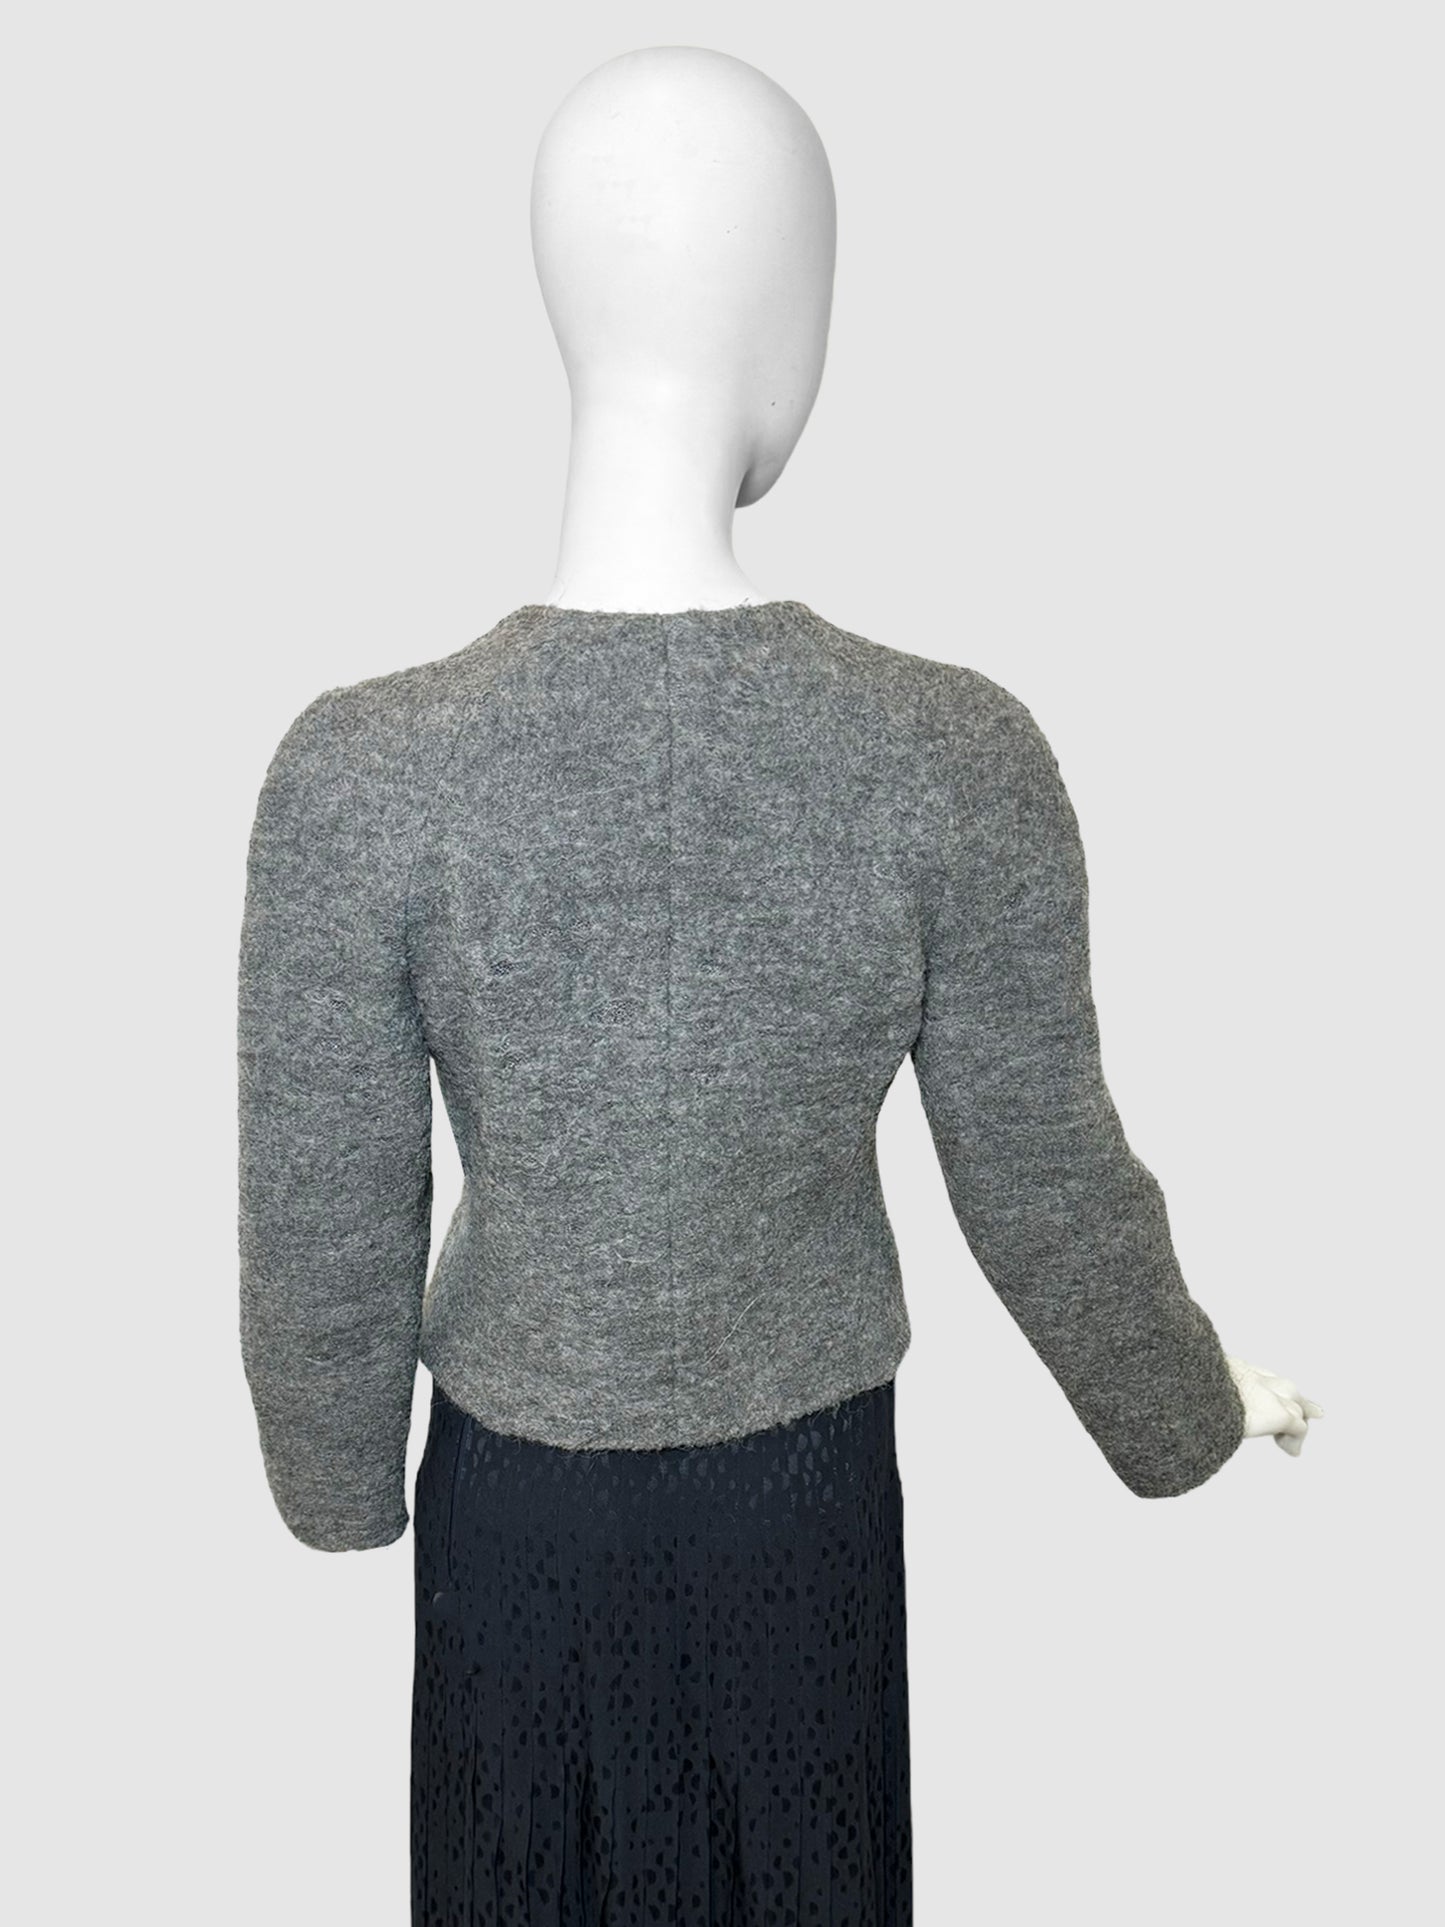 Wool Cropped Jacket - Size 40